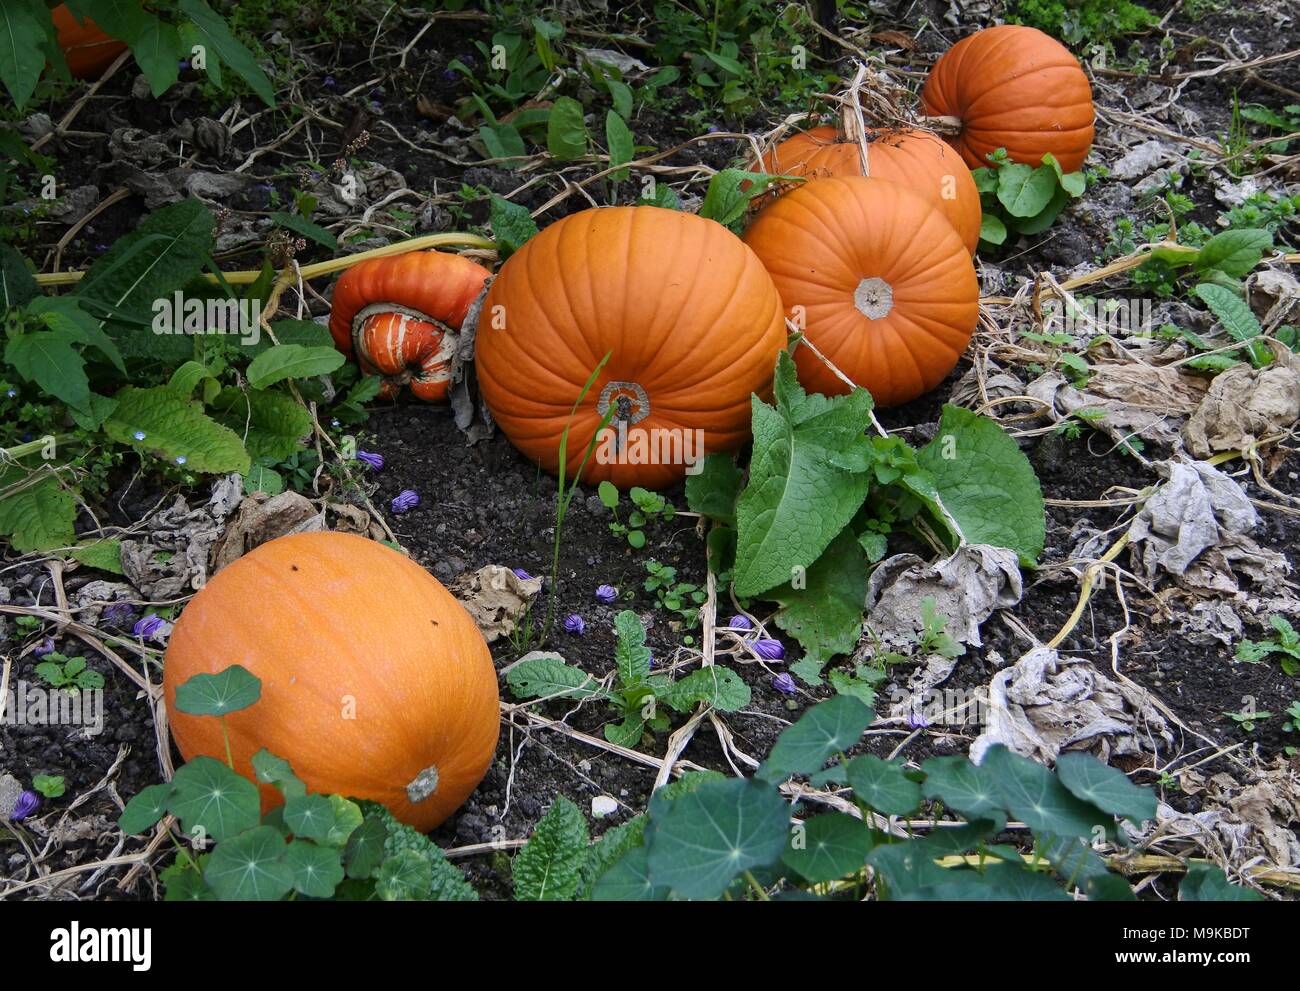 Ripe orange pumpkins ready to pick in a vegetable garden Stock Photo